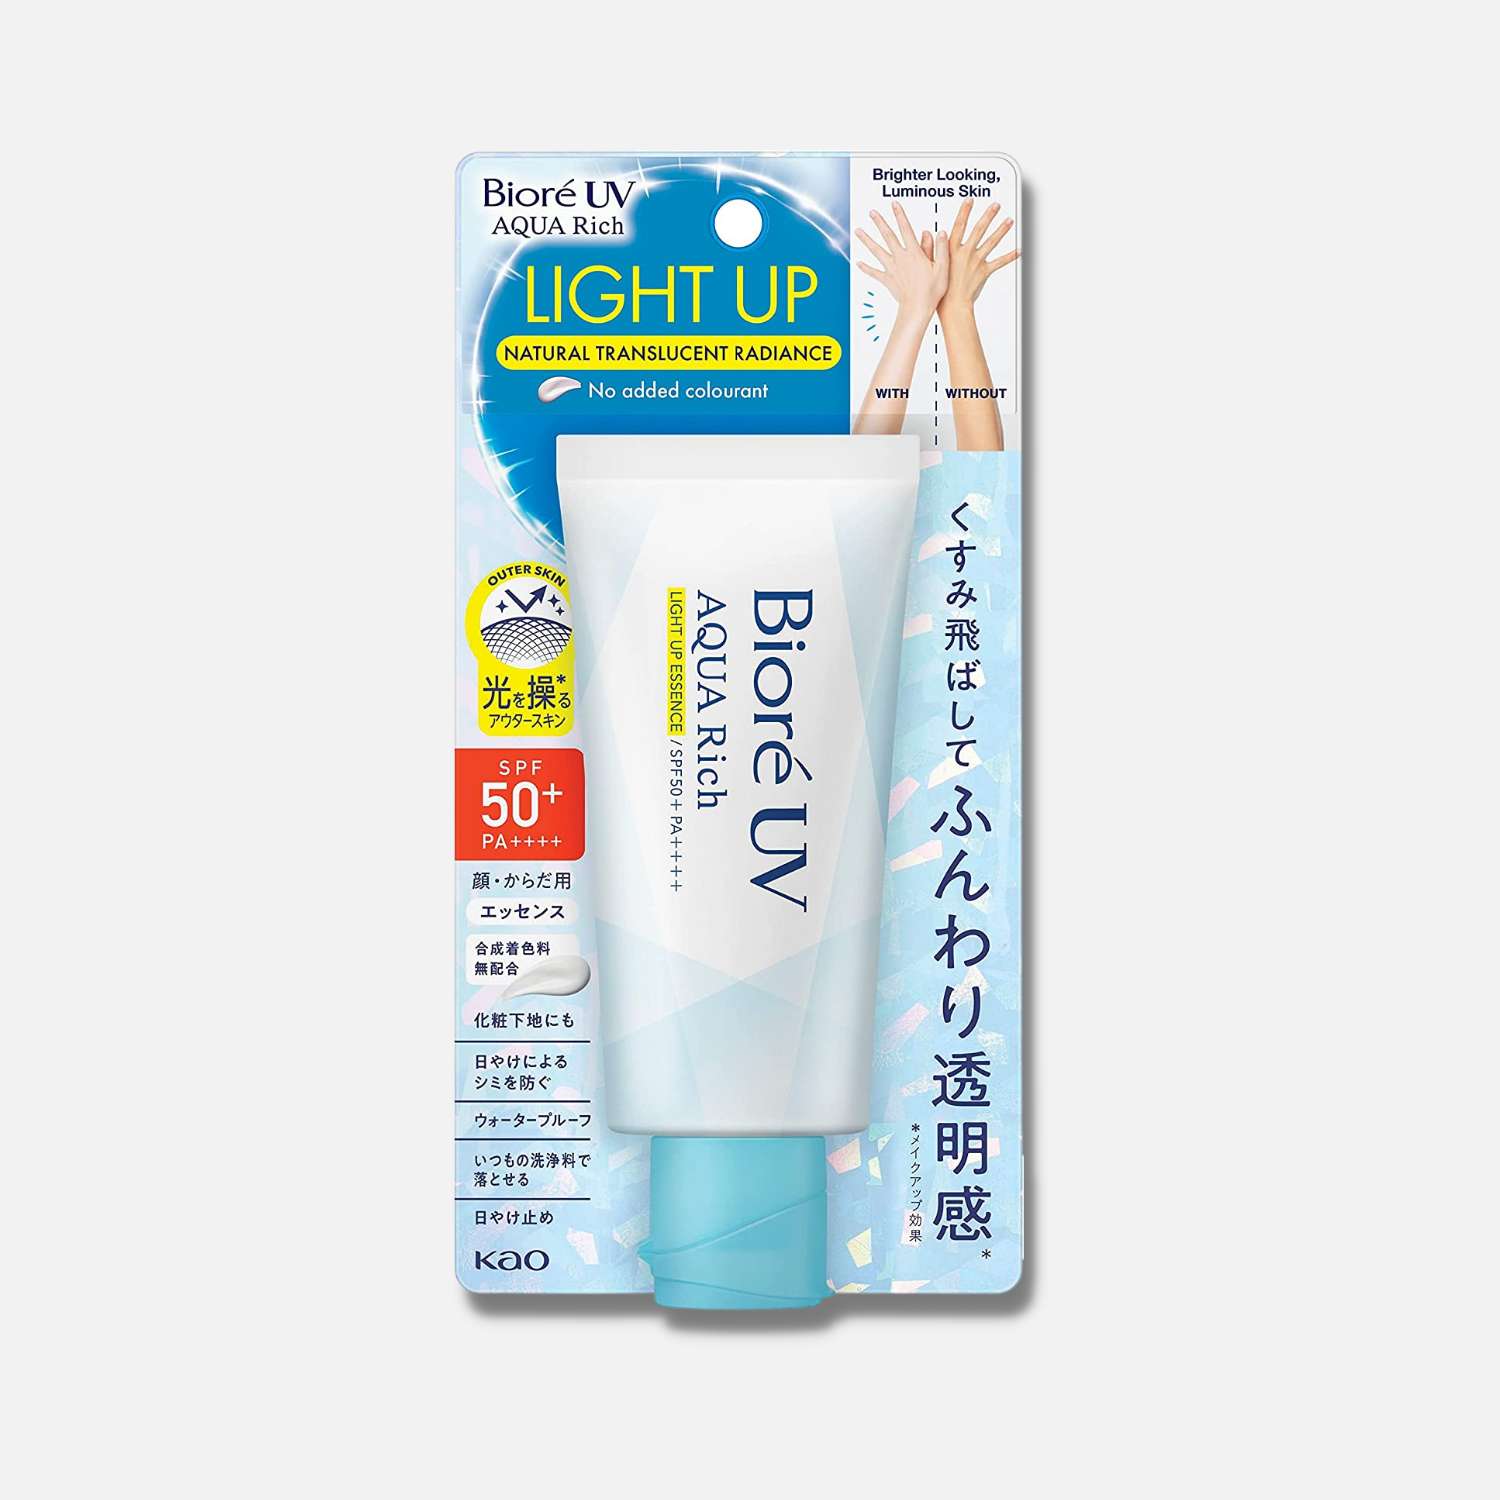 Biore UV Aqua Rich Light Up Essence SPF 50+ PA++++ 70g - Buy Me Japan